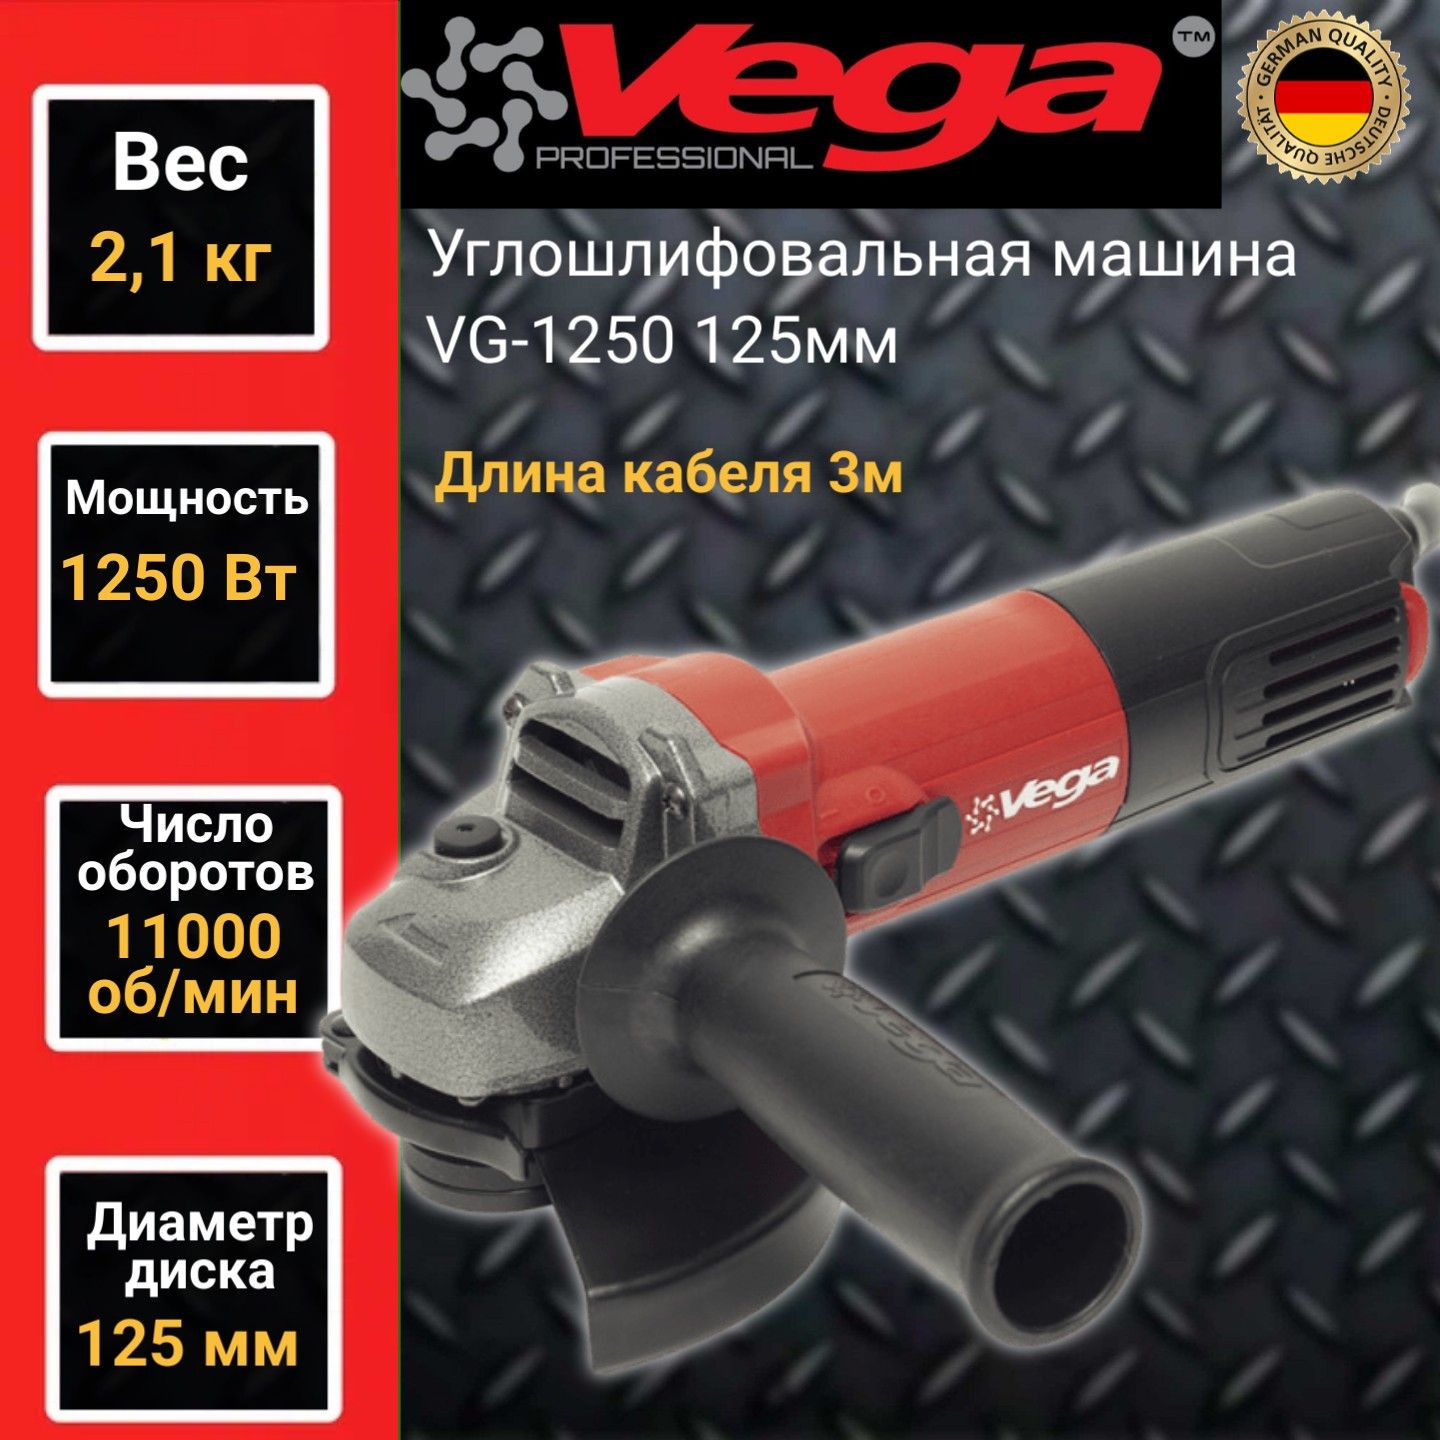 Углошлифовальная машина болгарка Vega Professional VG 1250, 125мм круг,1250Вт,11000об/мин болгарка ушм пкб арма